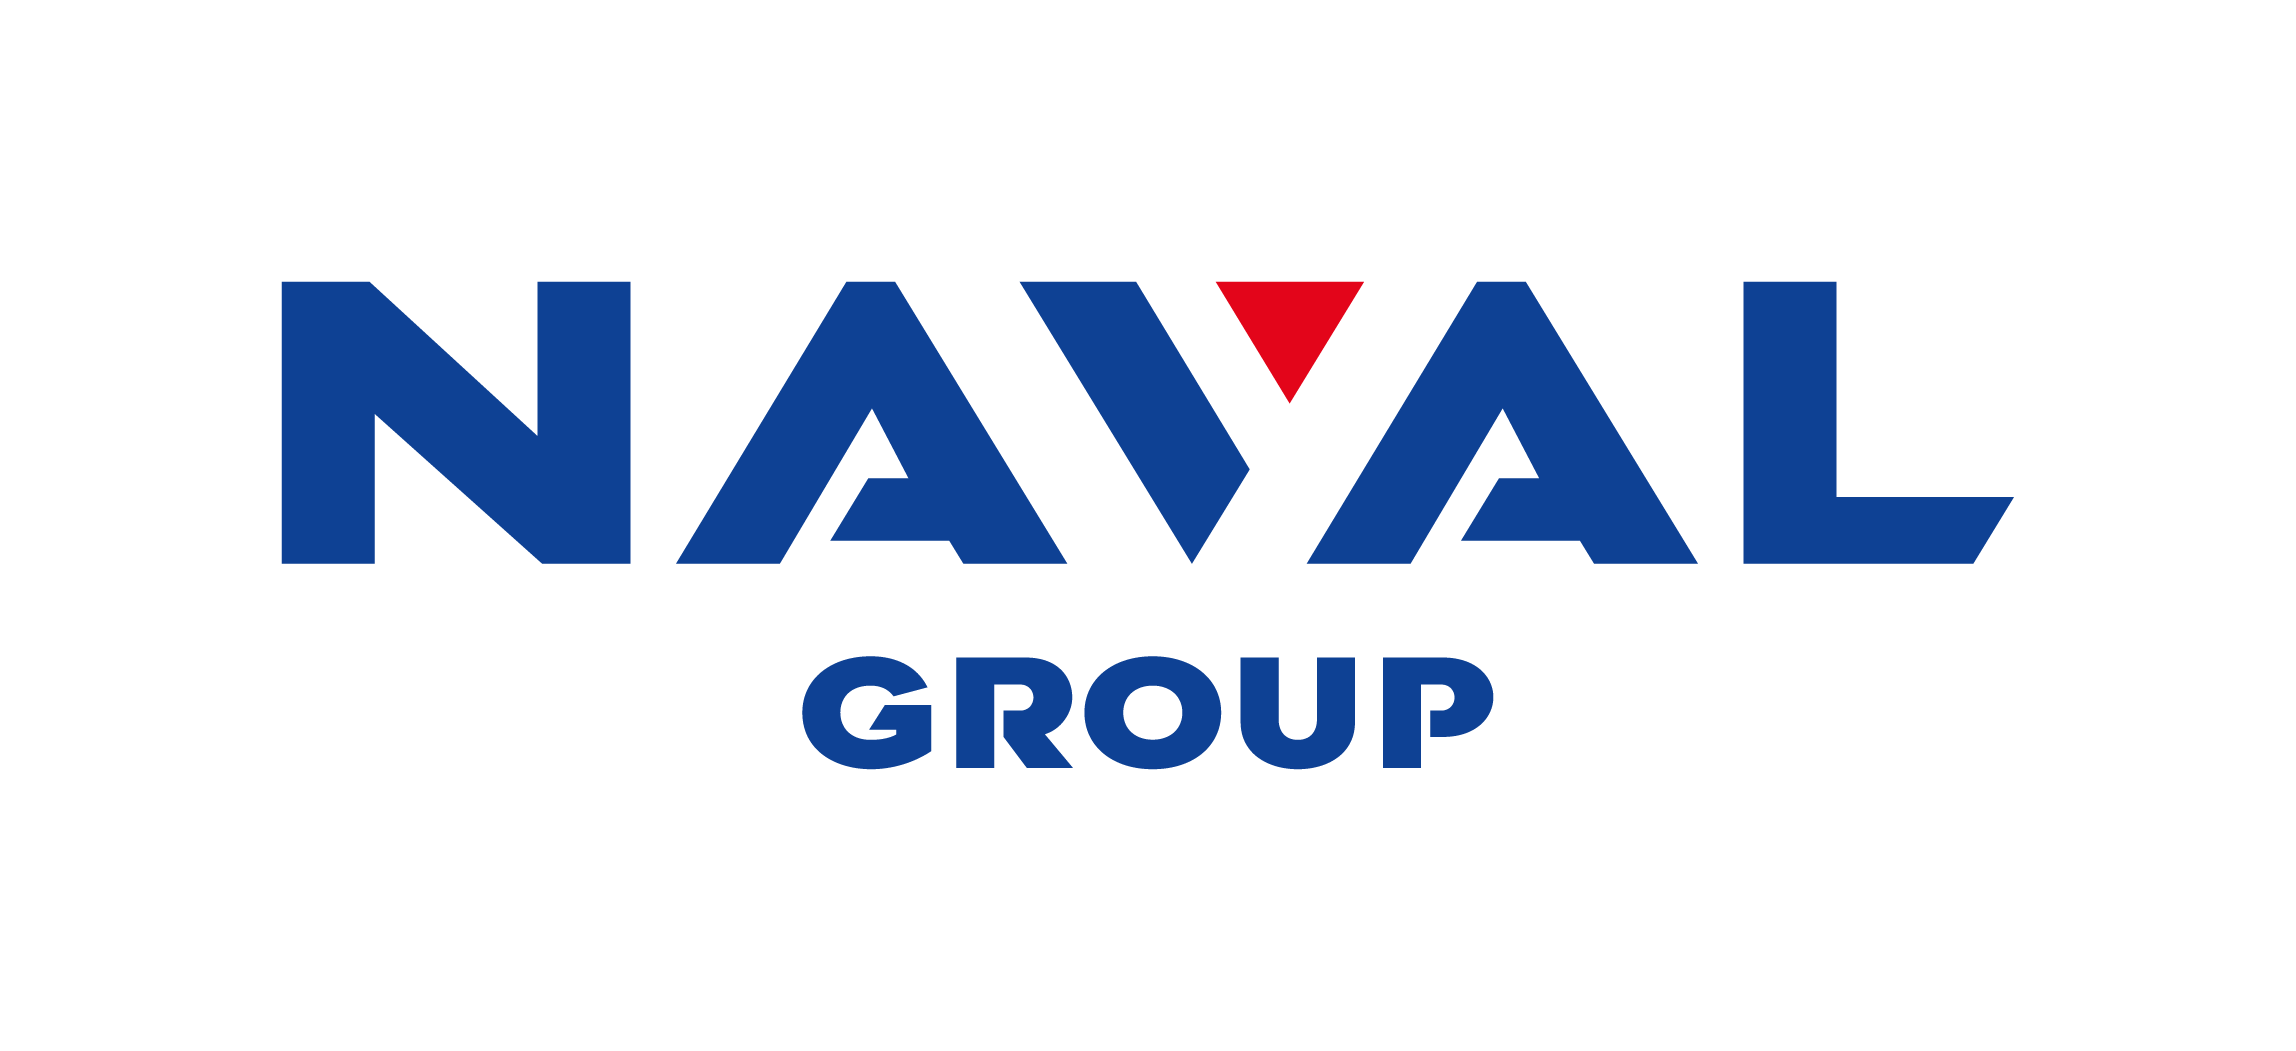 Naval Group